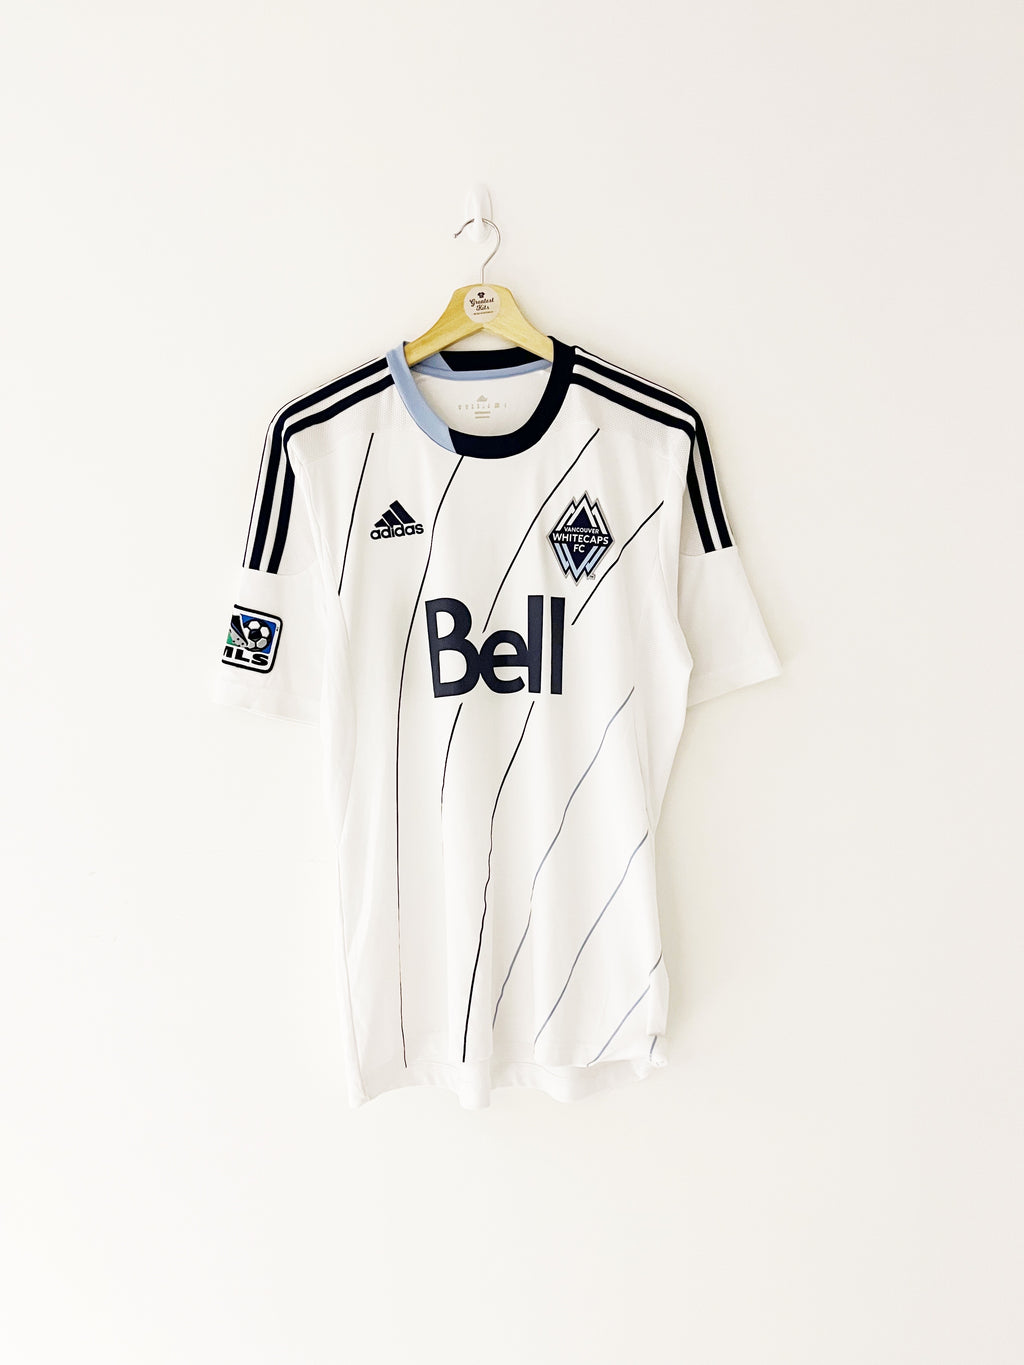 2013/14 Vancouver Whitecaps Home Shirt (M) 9/10